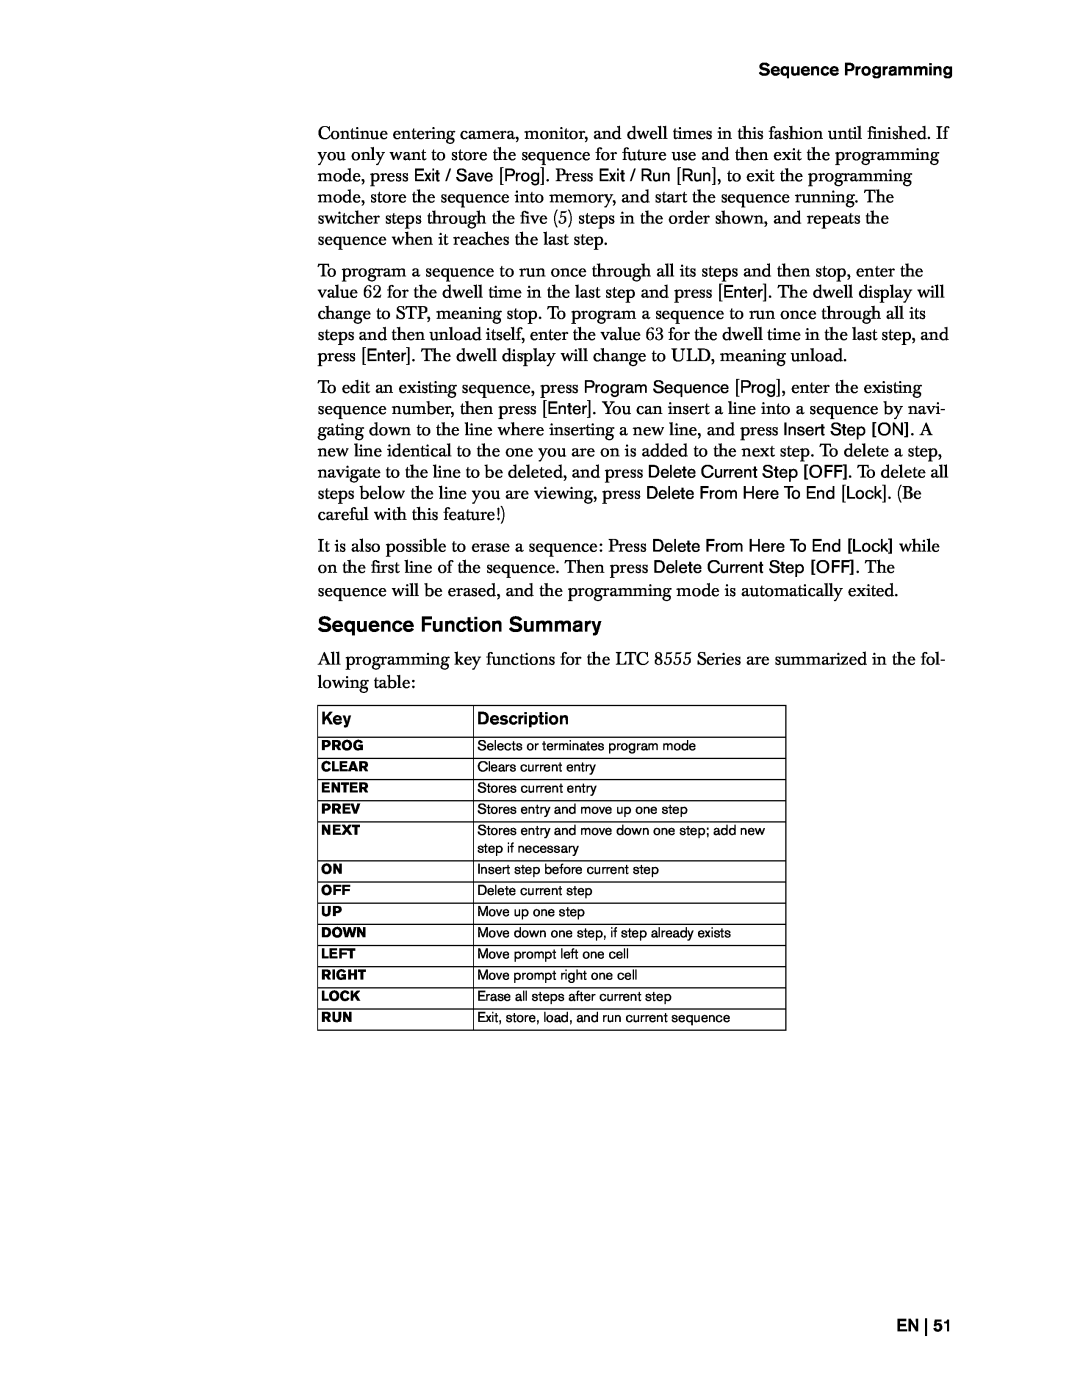 Bosch Appliances 8500, LTC instruction manual Sequence Function Summary, Description 